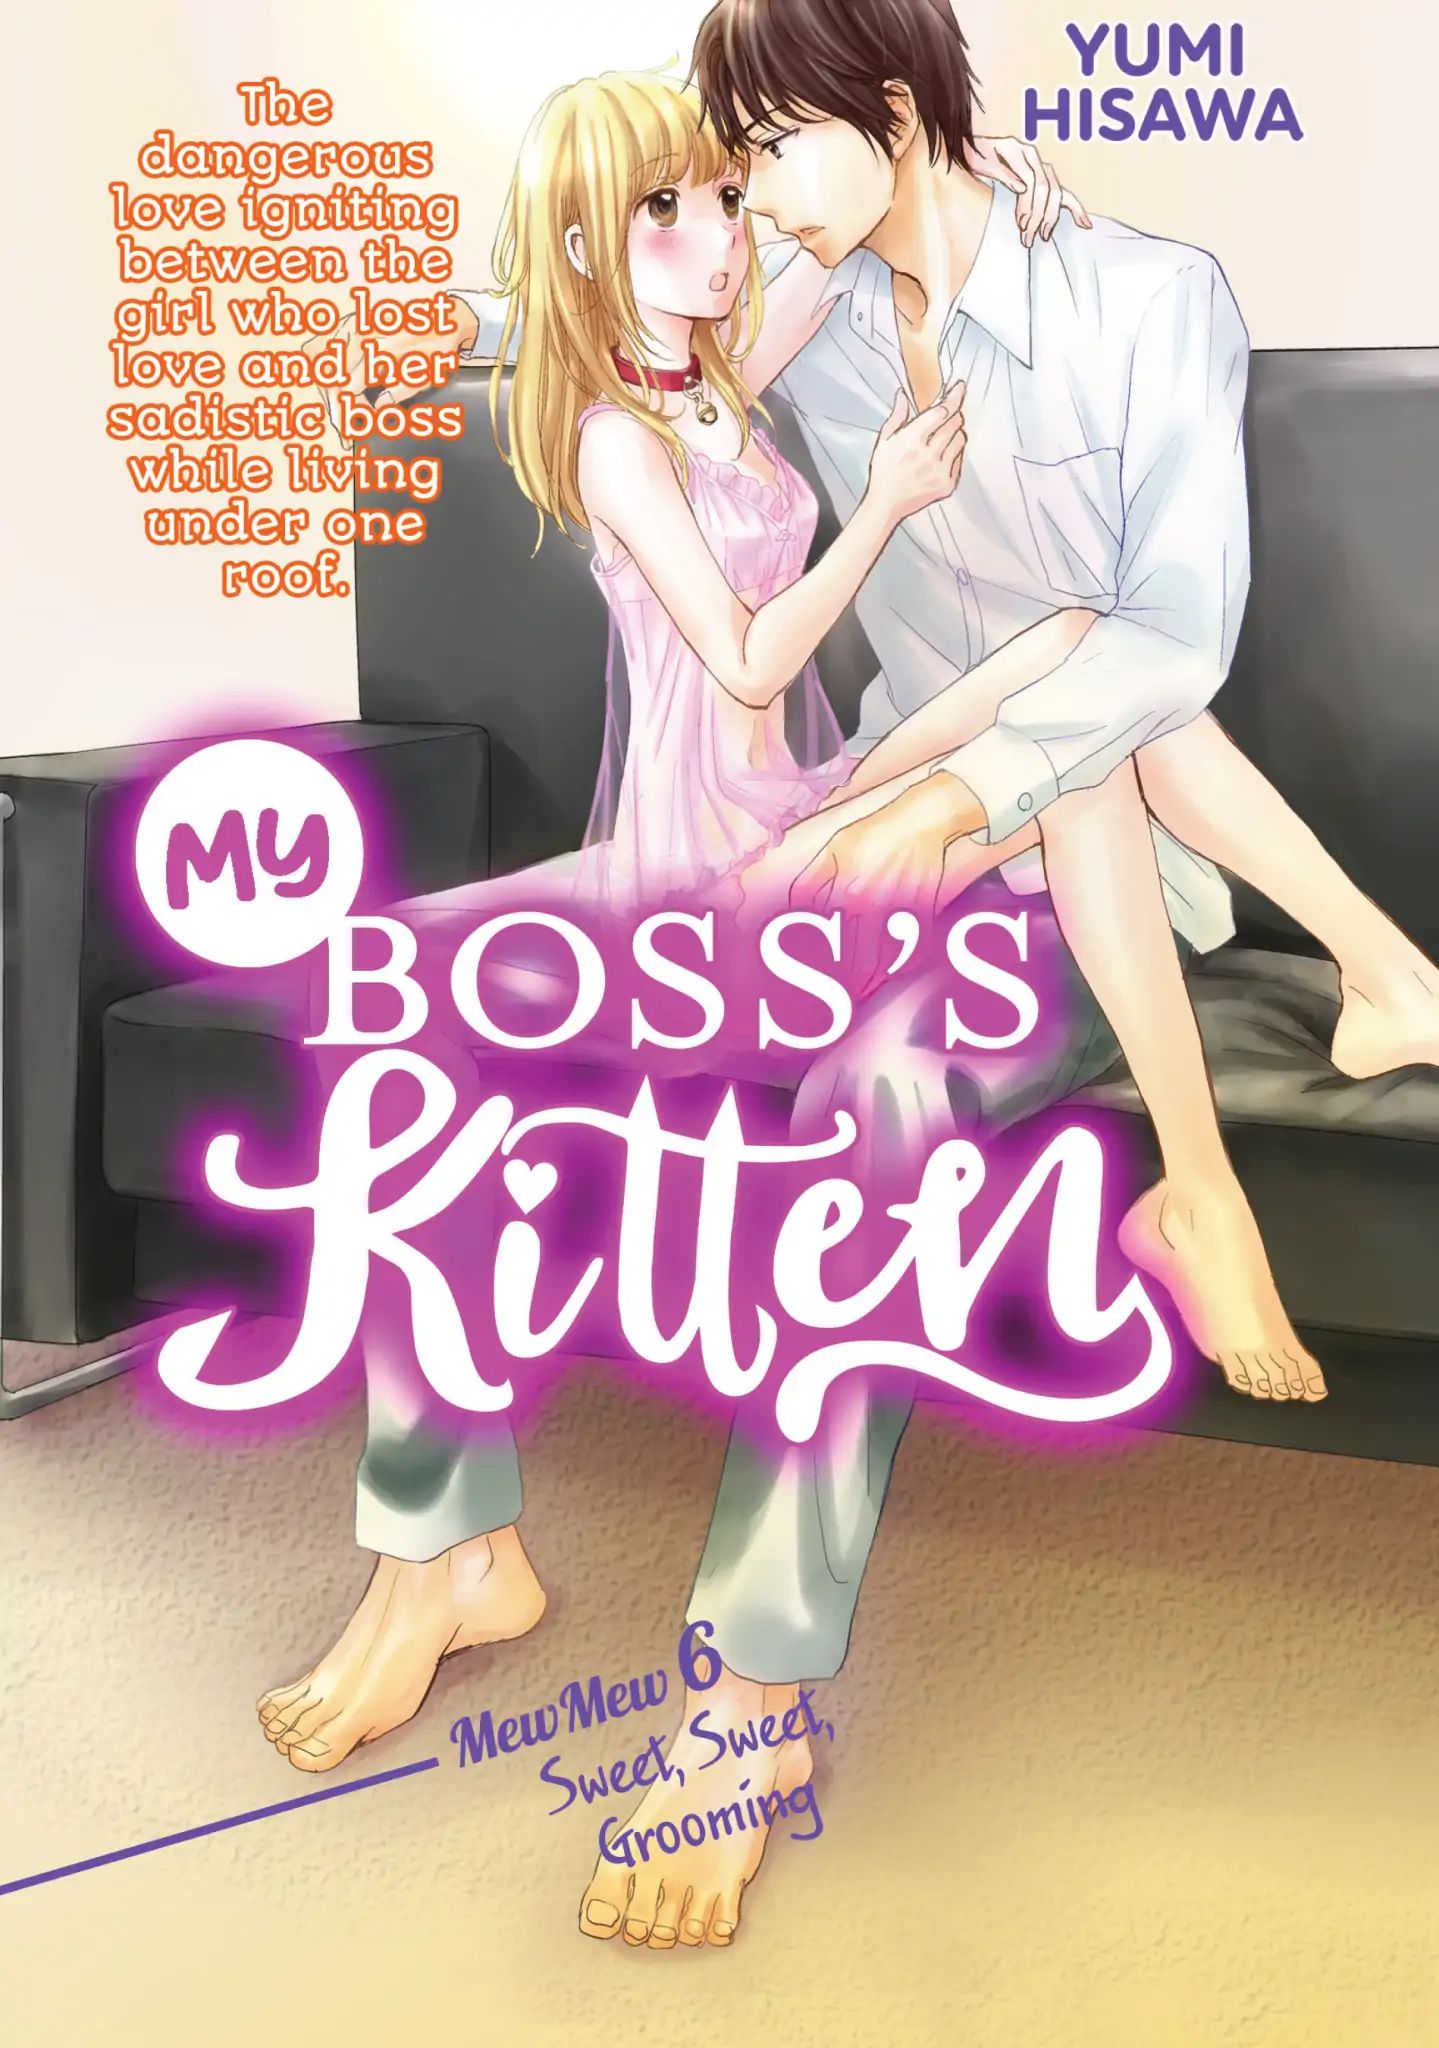 My Boss's Kitten Vol.2 Mewmew 6: Sweet, Sweet, Grooming - Picture 1